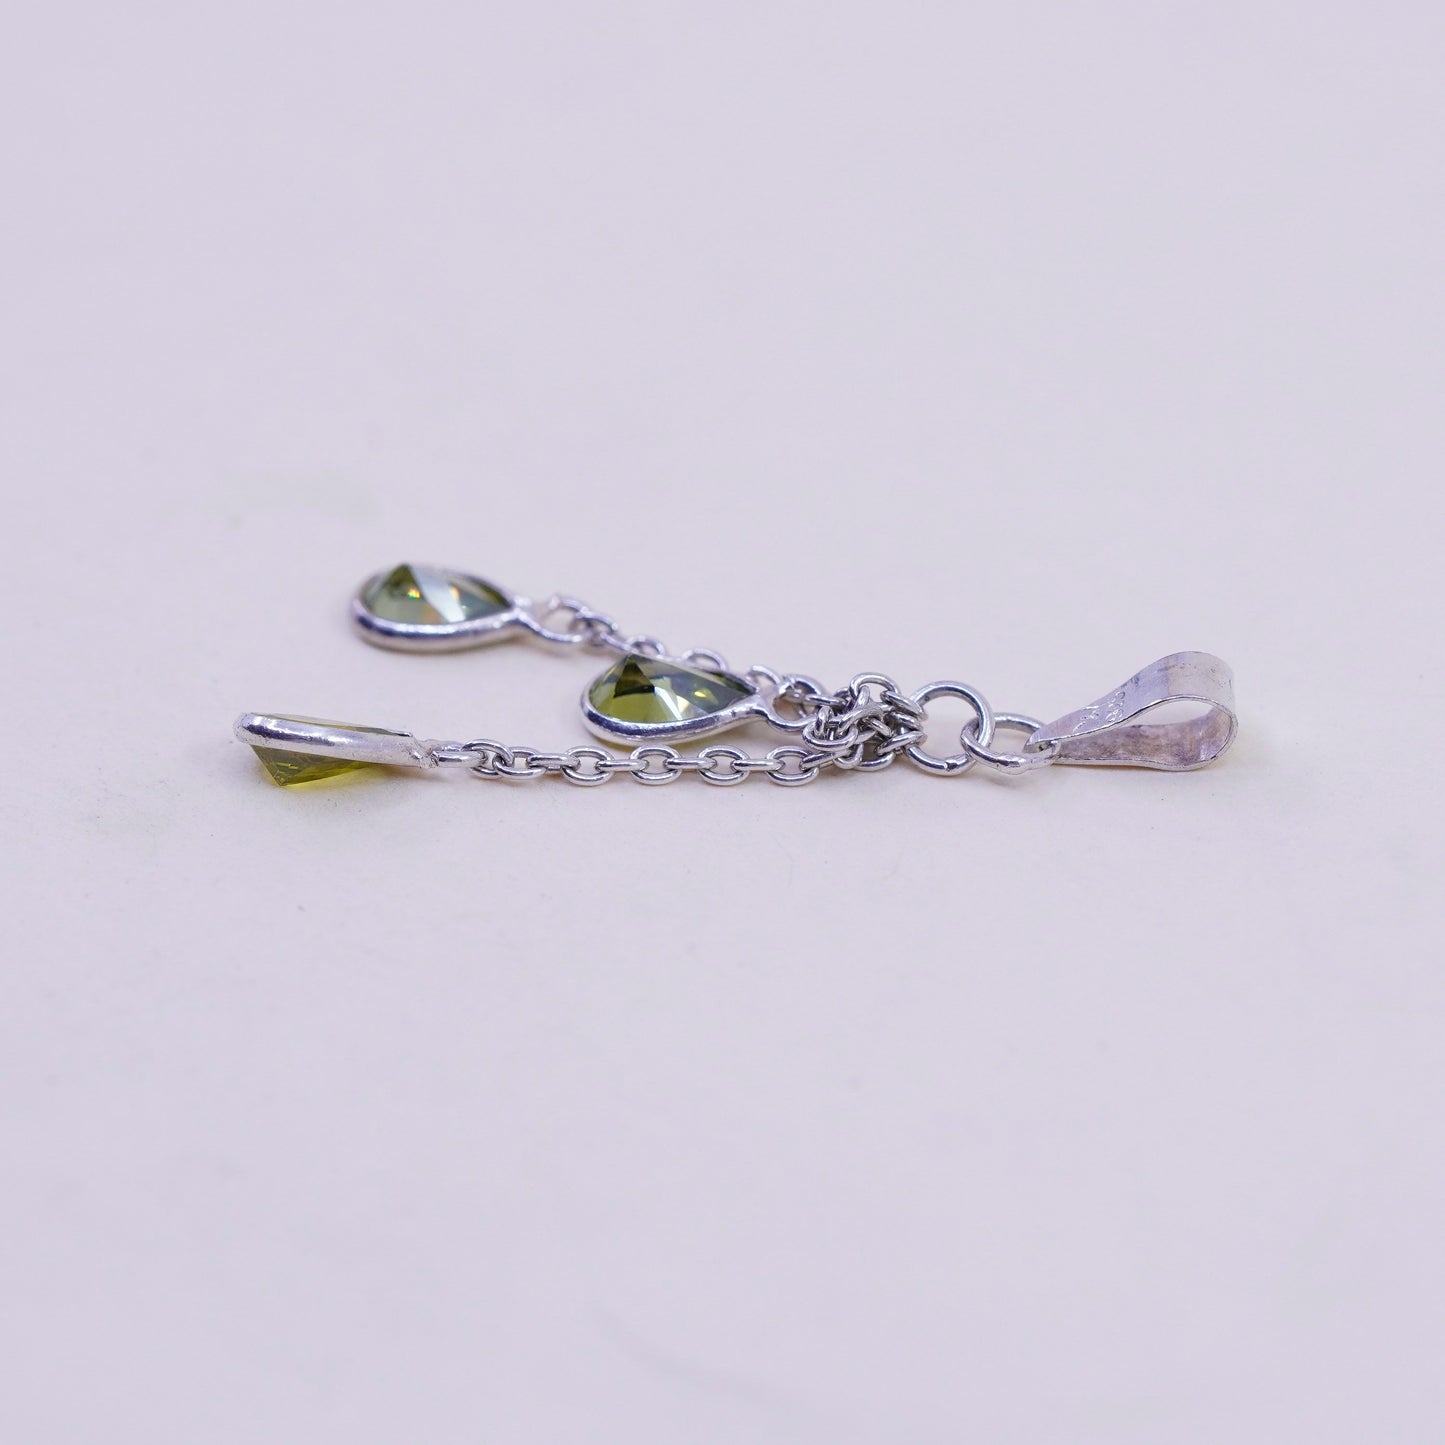 Vintage handmade Sterling 925 silver angel pendant with teardrop peridot